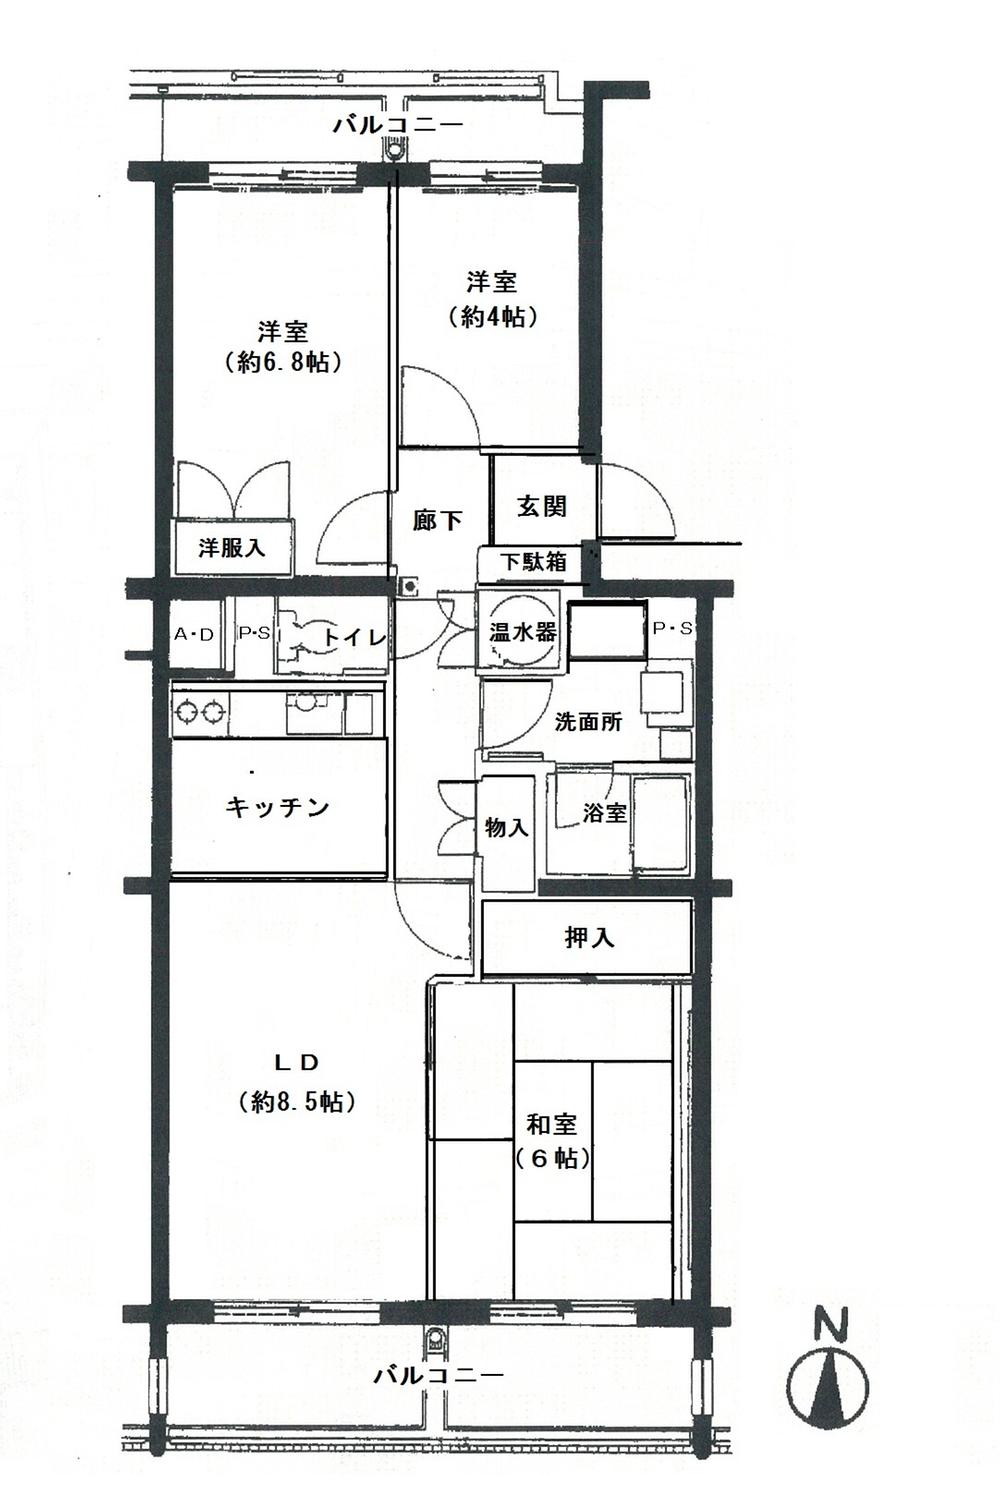 Floor plan. 3LDK, Price 8.8 million yen, Occupied area 67.69 sq m , Balcony area 13.15 sq m